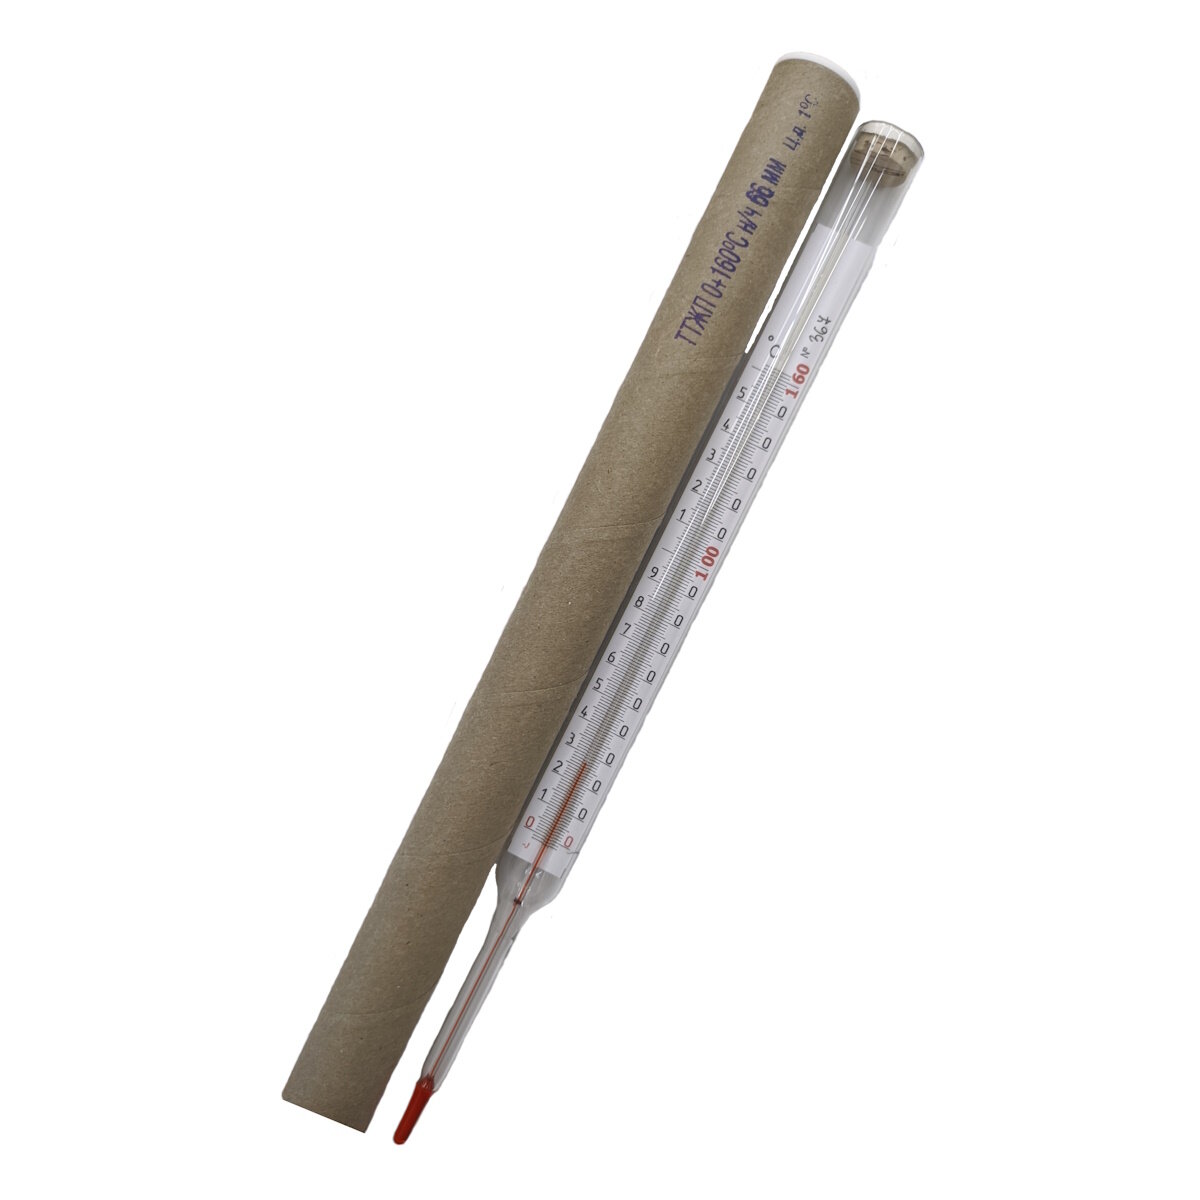 Термометр технический жидкостный ТТЖ П 0.+160 С н/ч 66 мм, цена деления 2 С